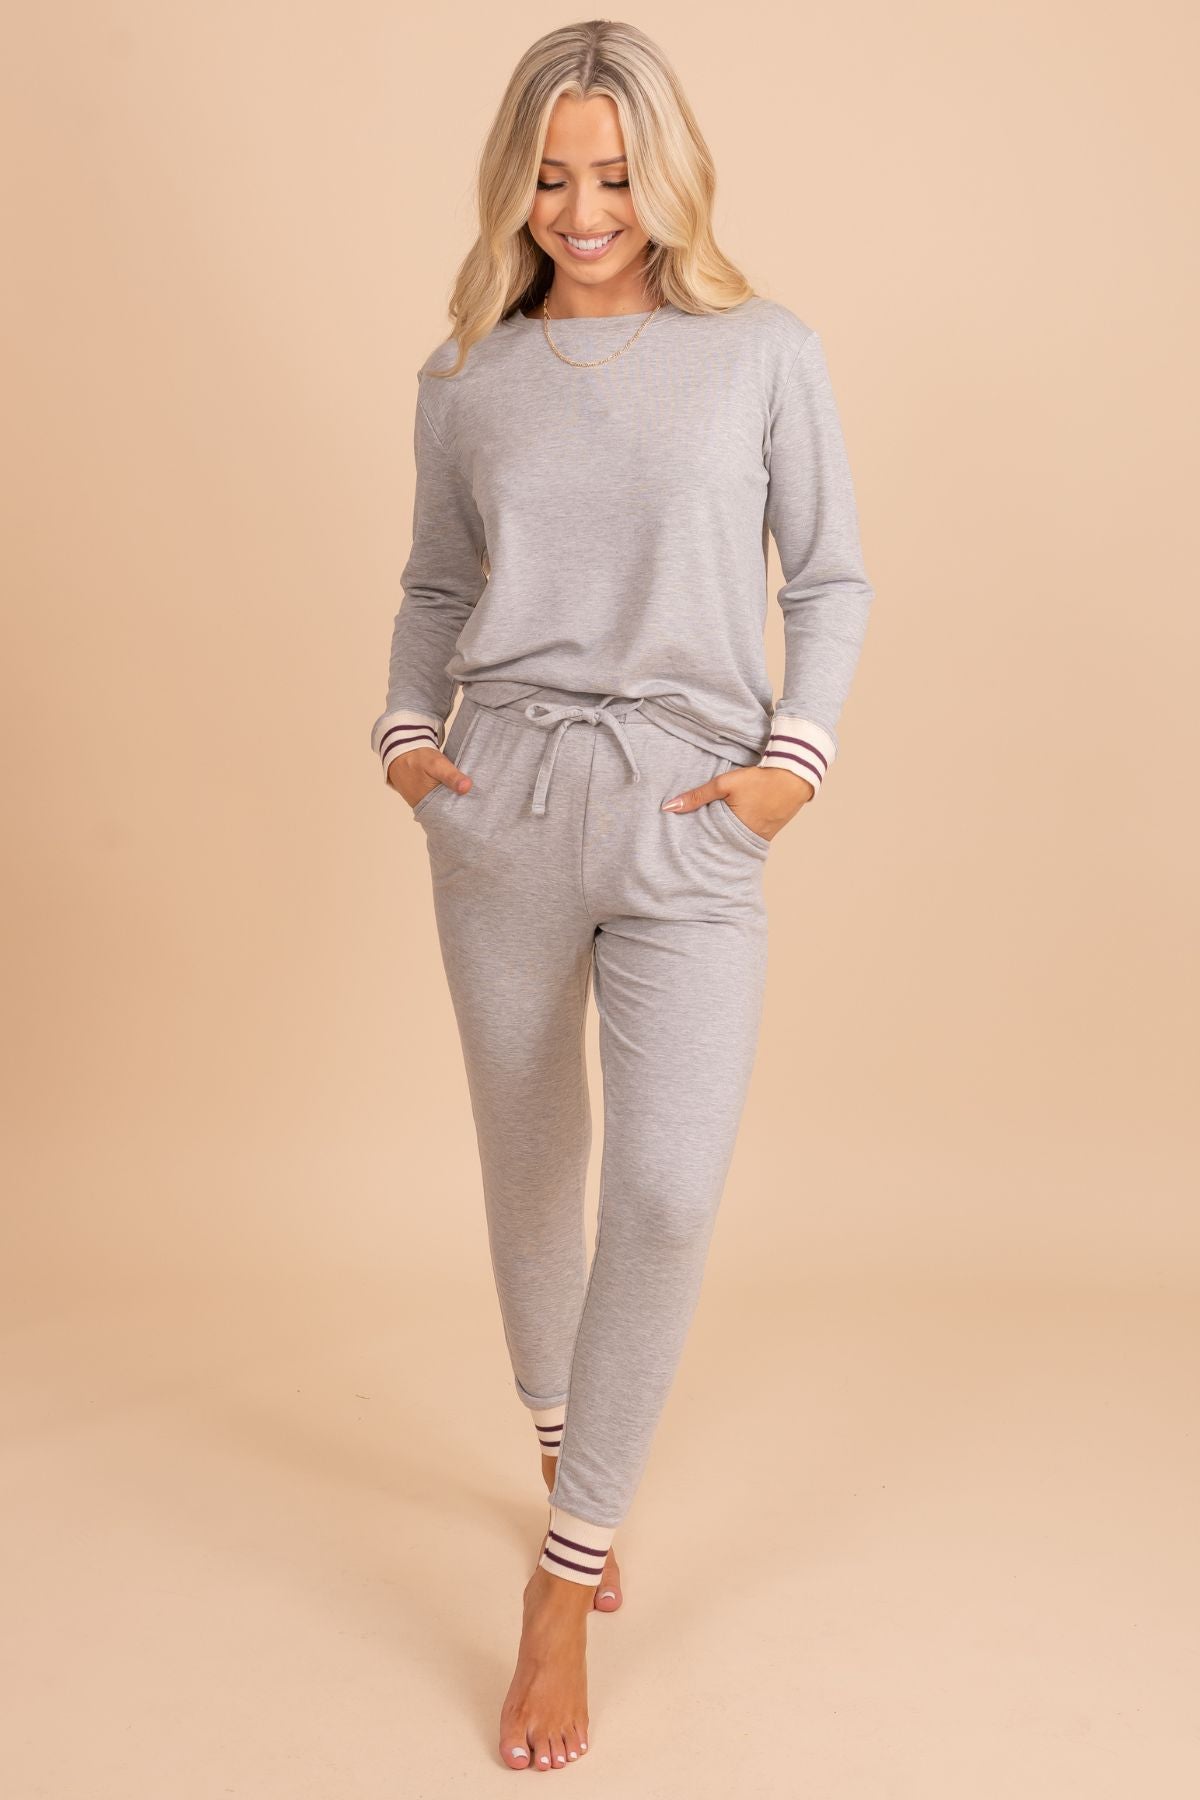 Gray Two-Piece Boutique Loungewear for Women